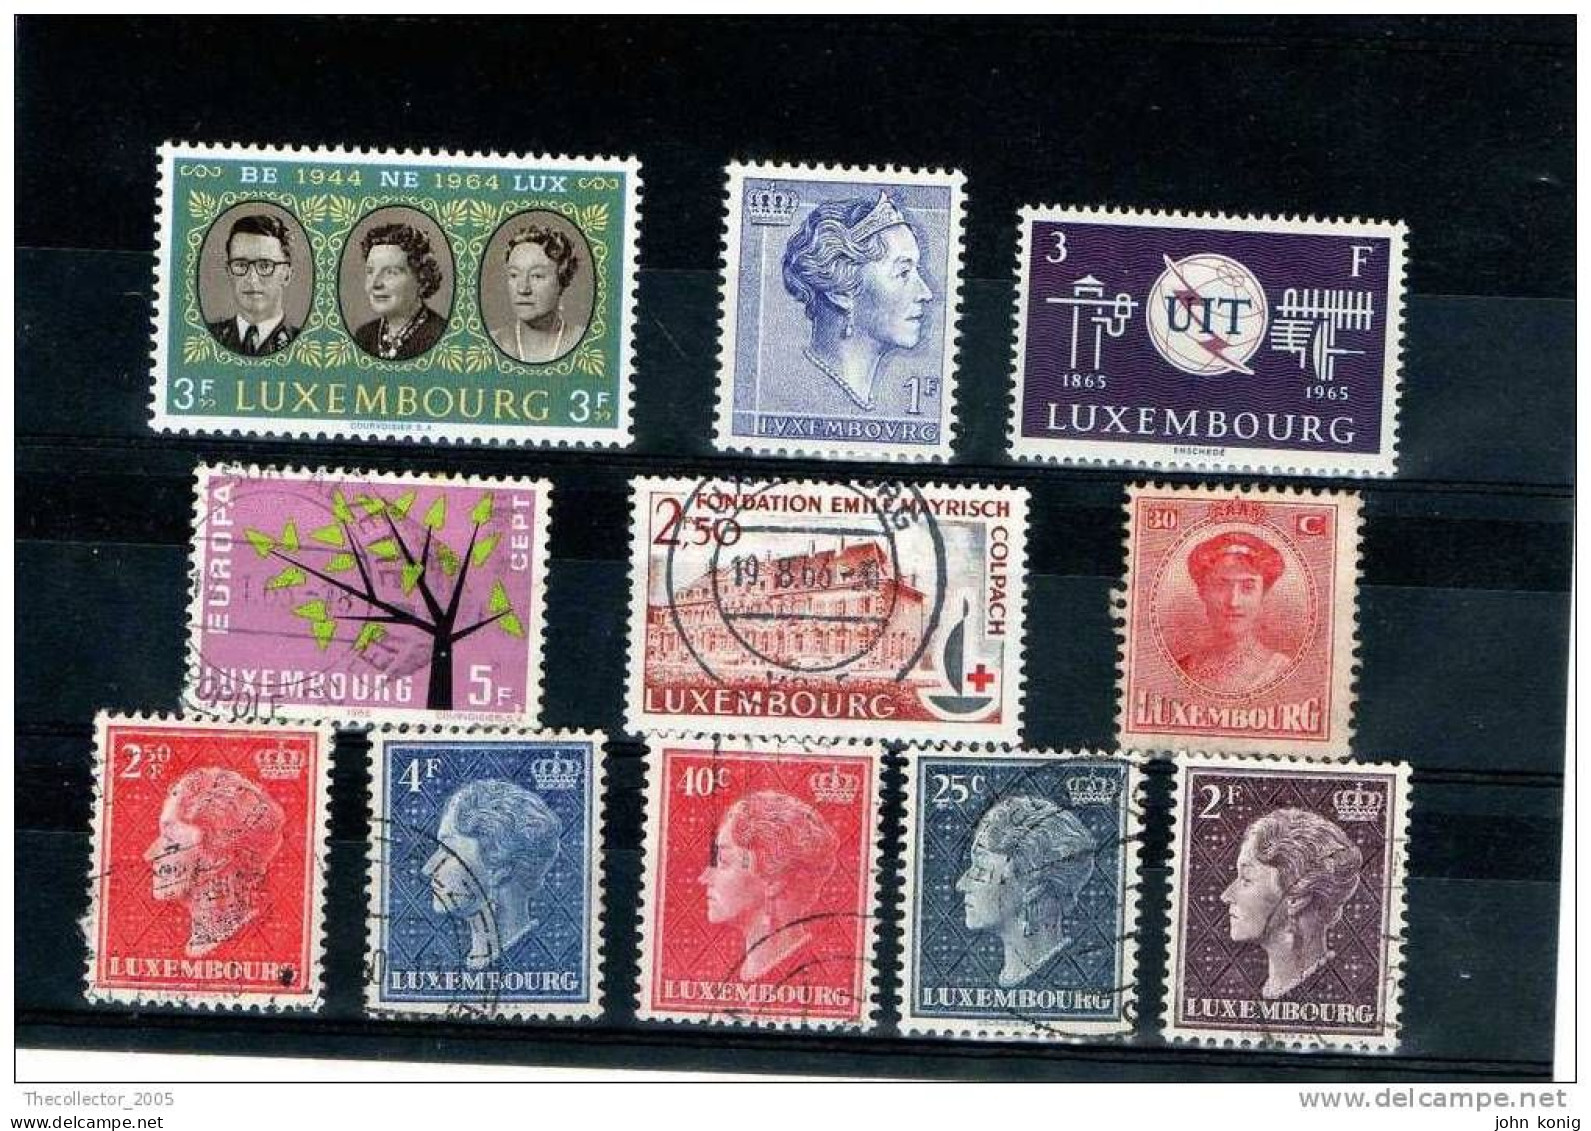 Lussemburgo - Luxembourg - Lotto Francobolli - Stamps Lot - Colecciones